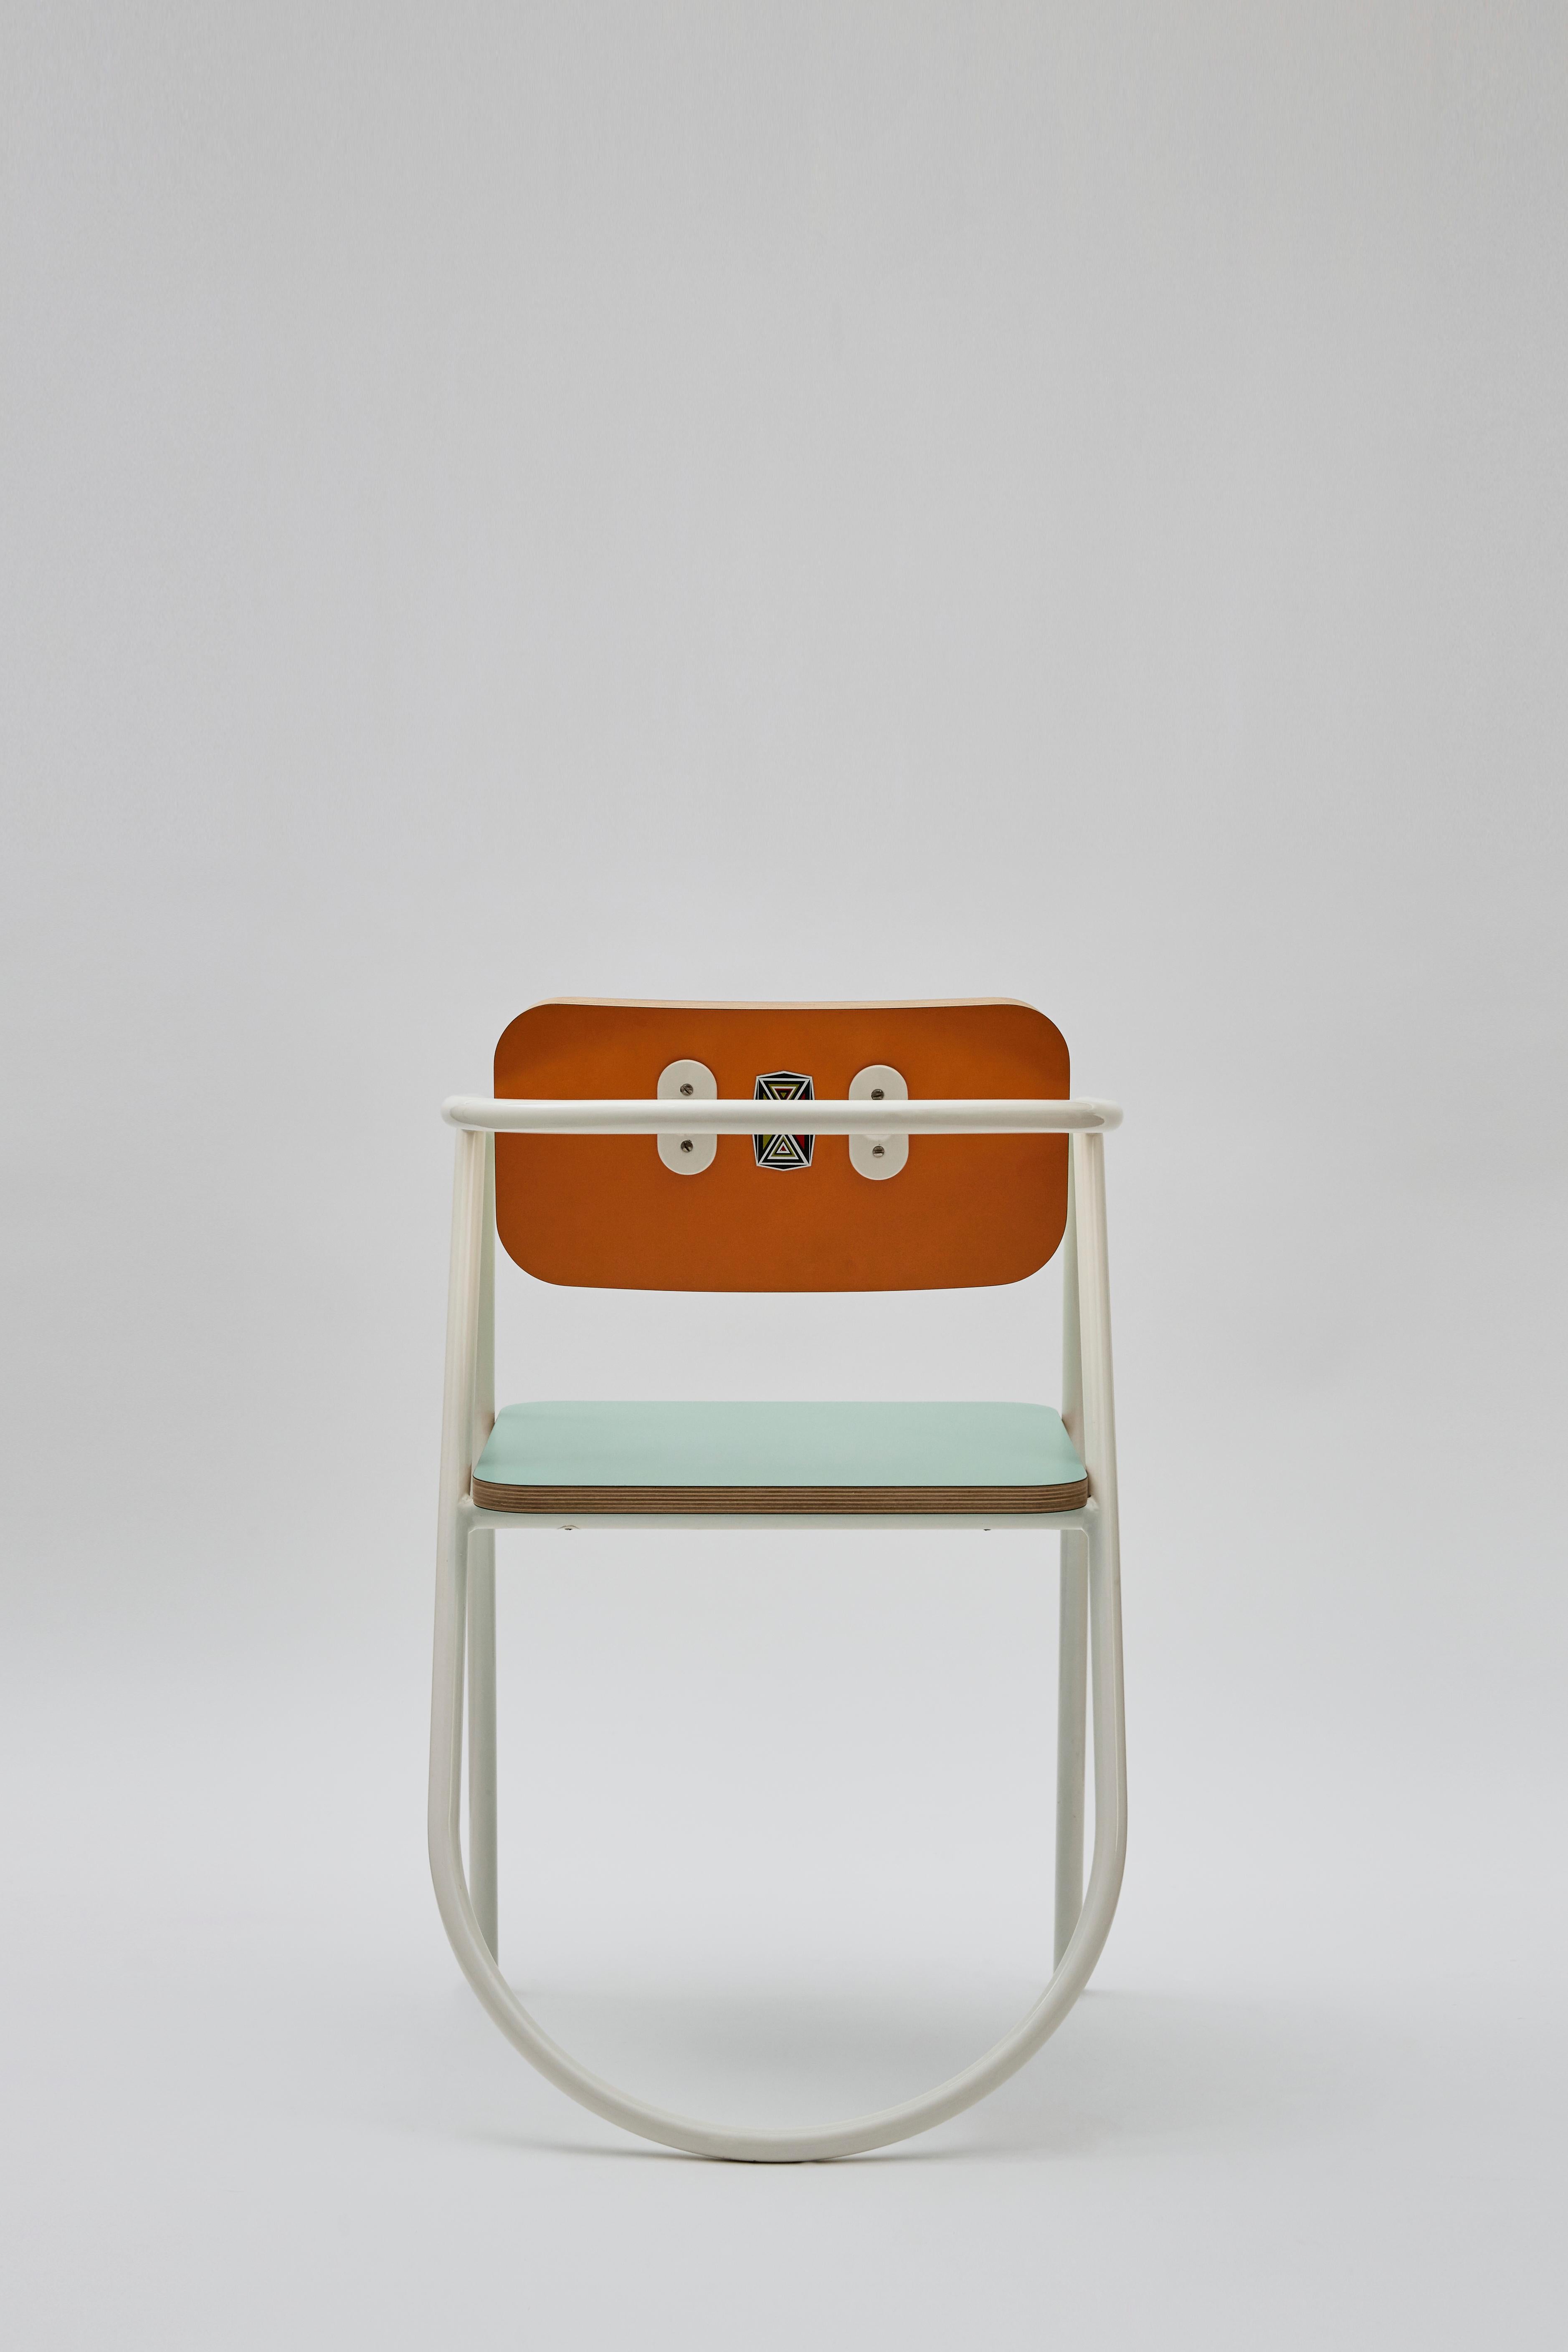 Italian La Misciù Chair, White, Teal & Orange For Sale